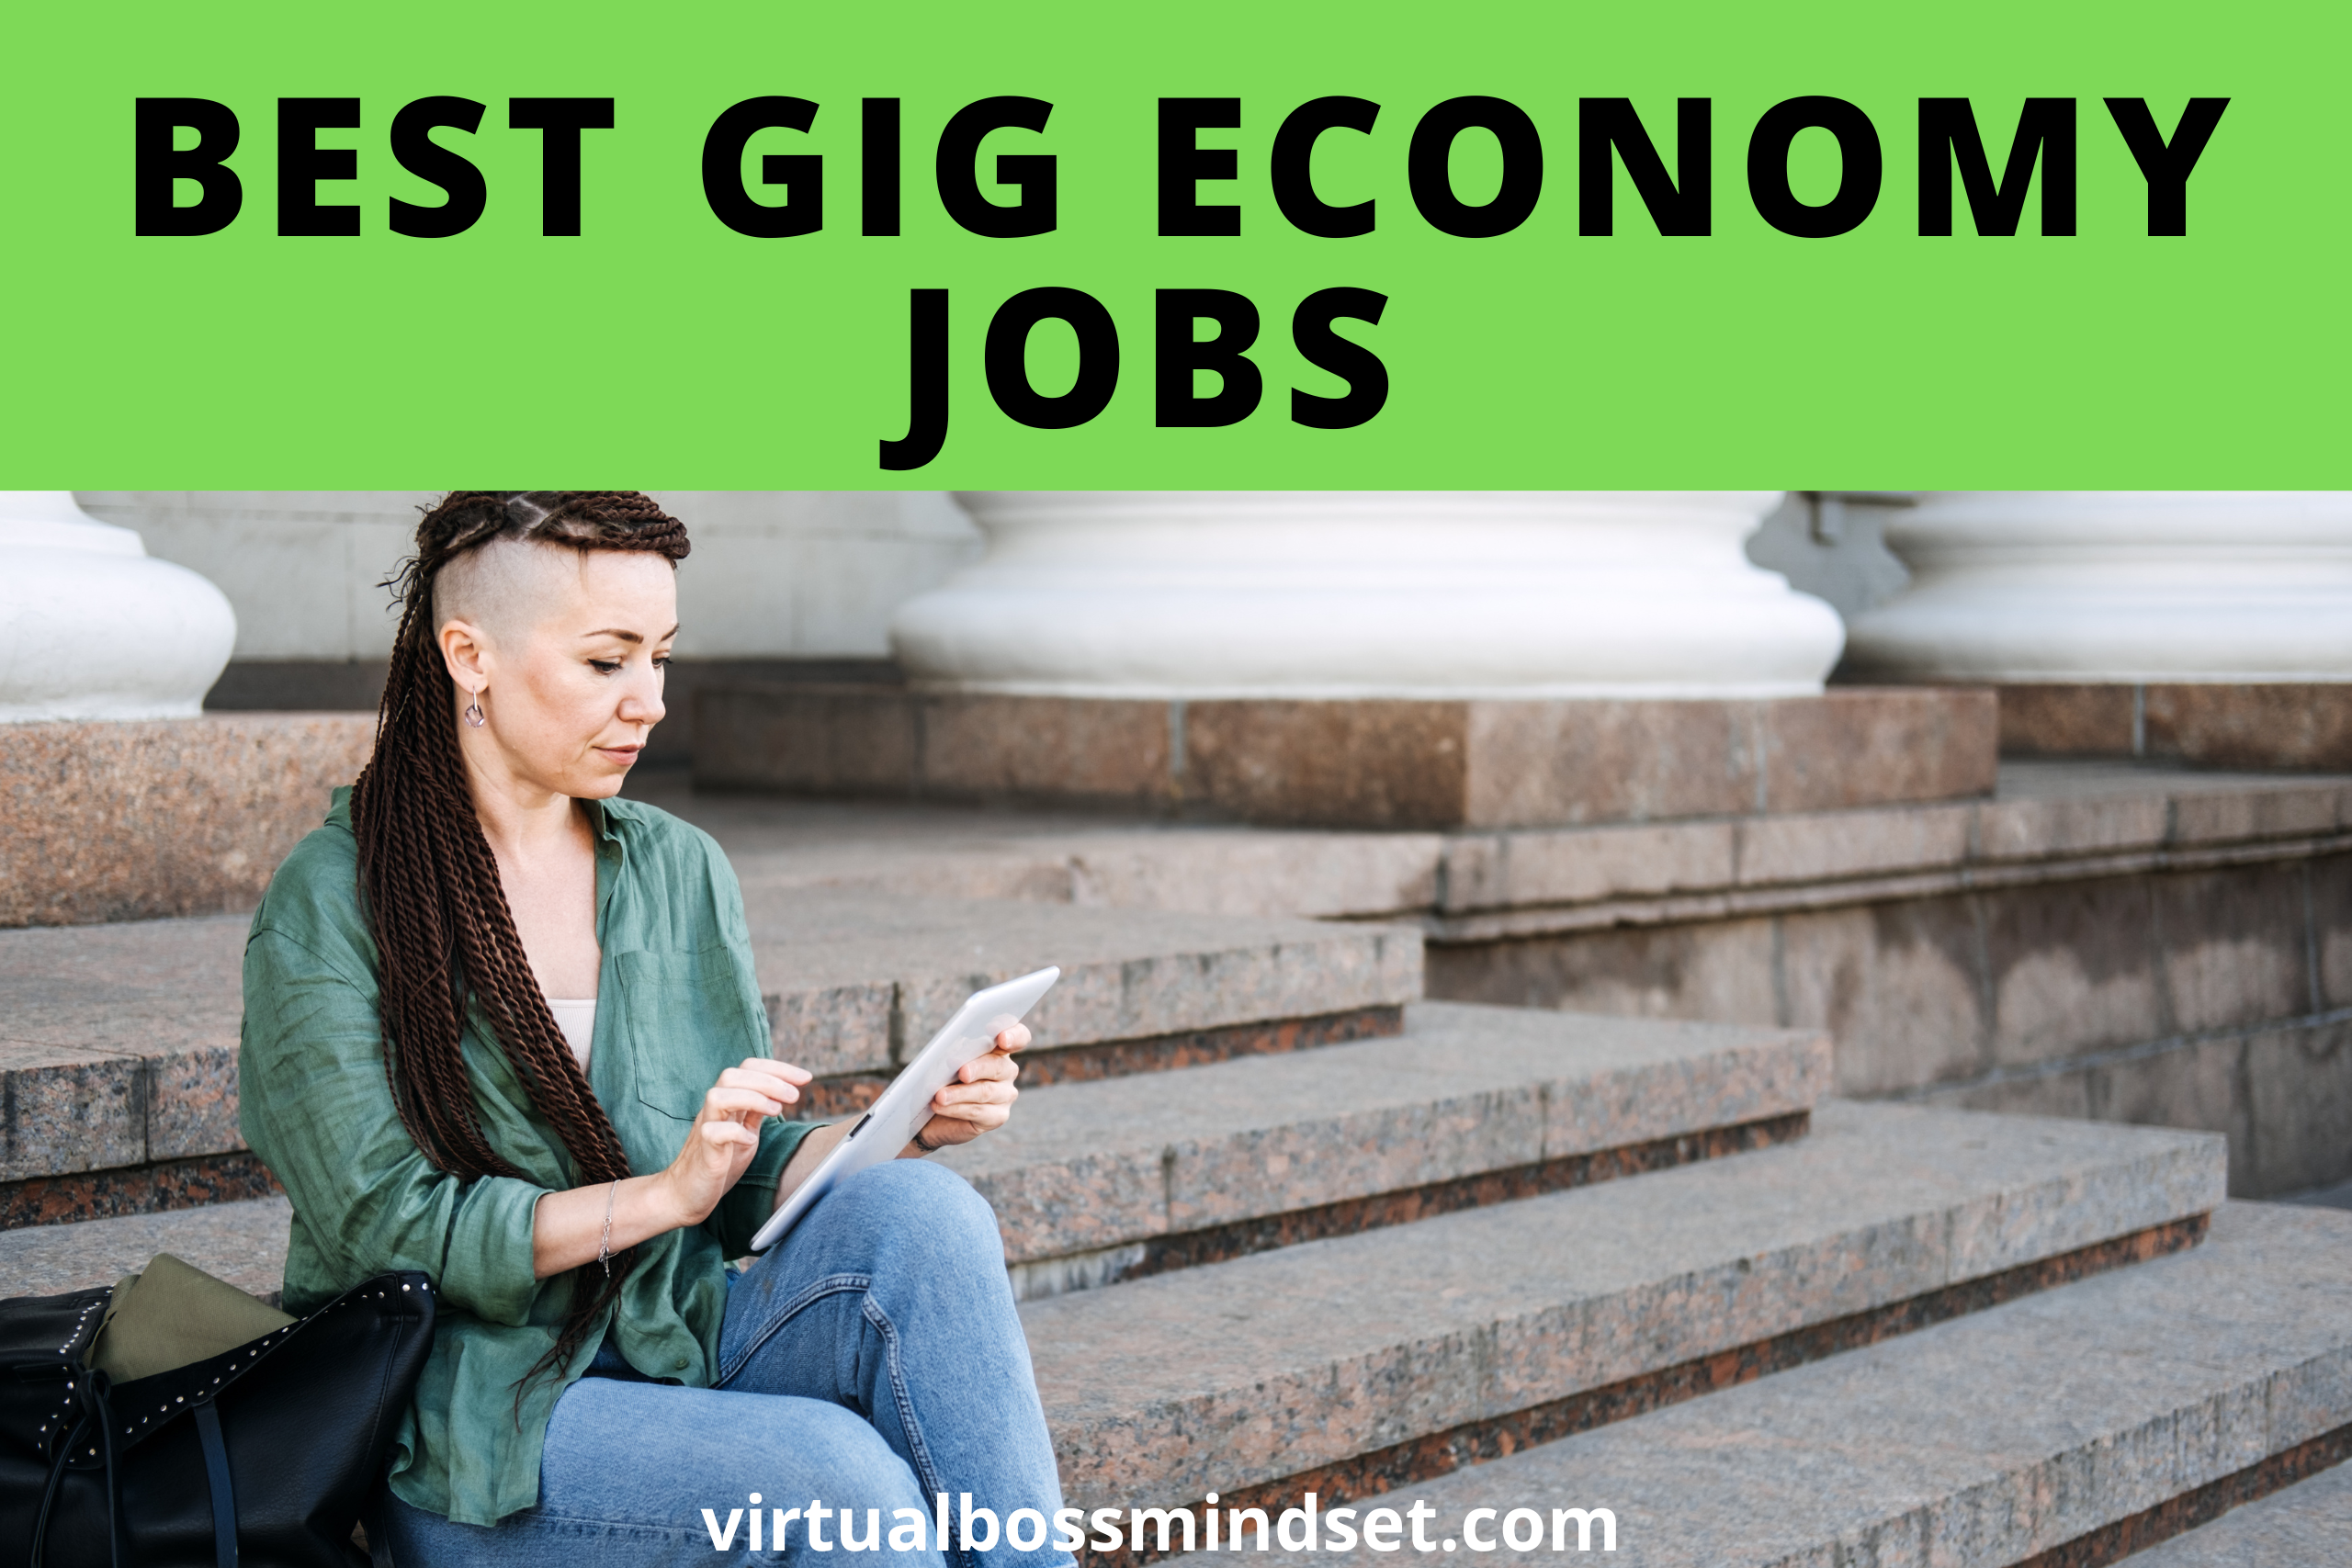 10 Best Gig Economy Jobs to Make More Money